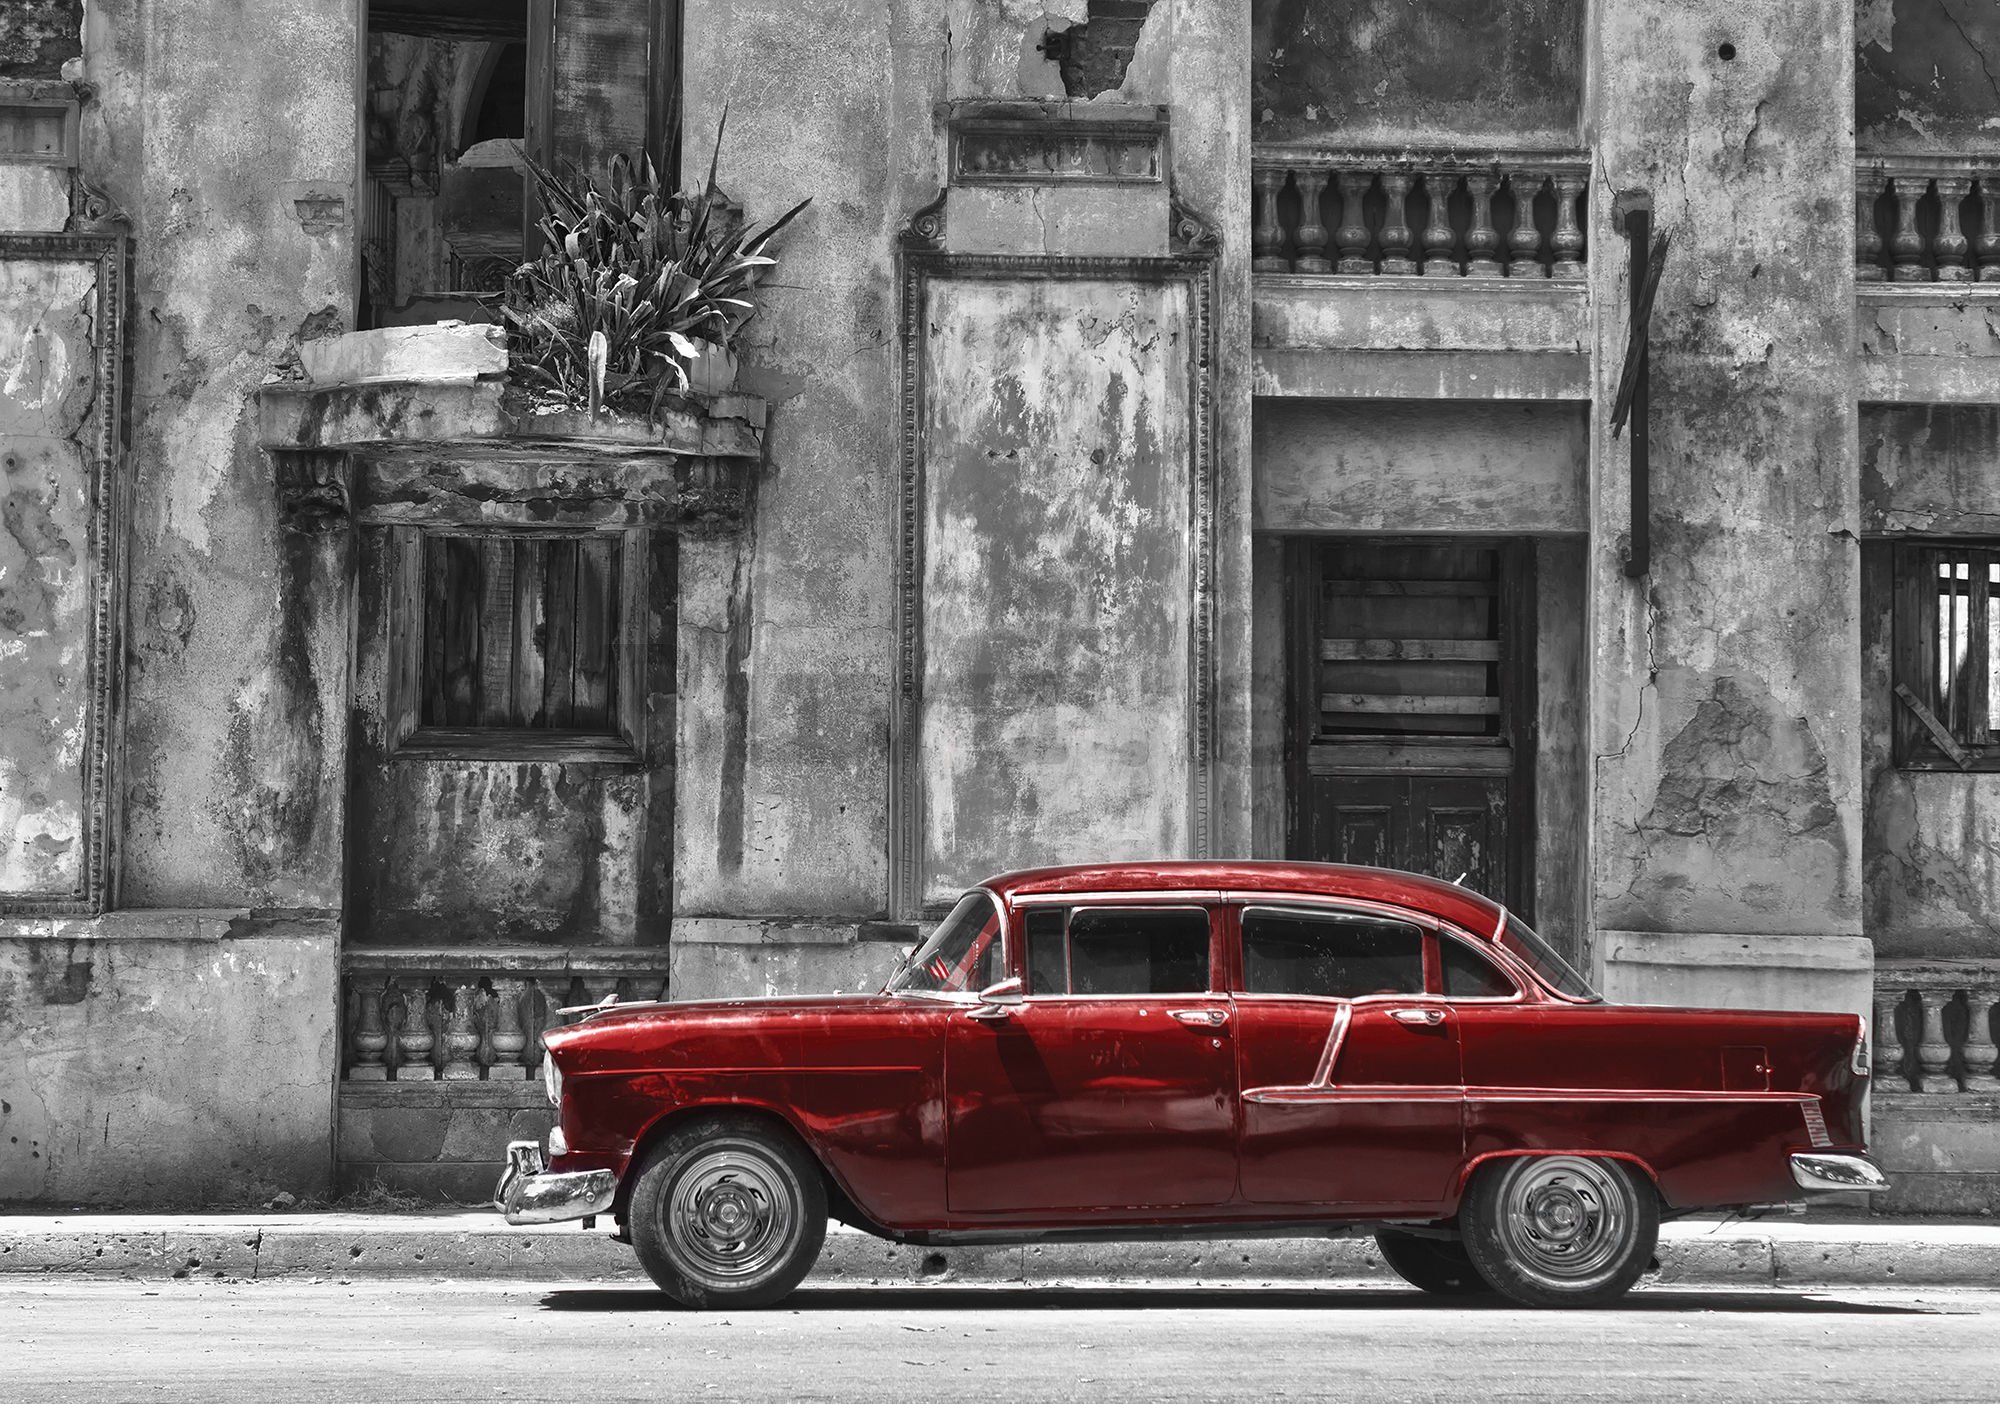 Fotomural TNT: Calle cubana coche rojo - 104x152,5 cm